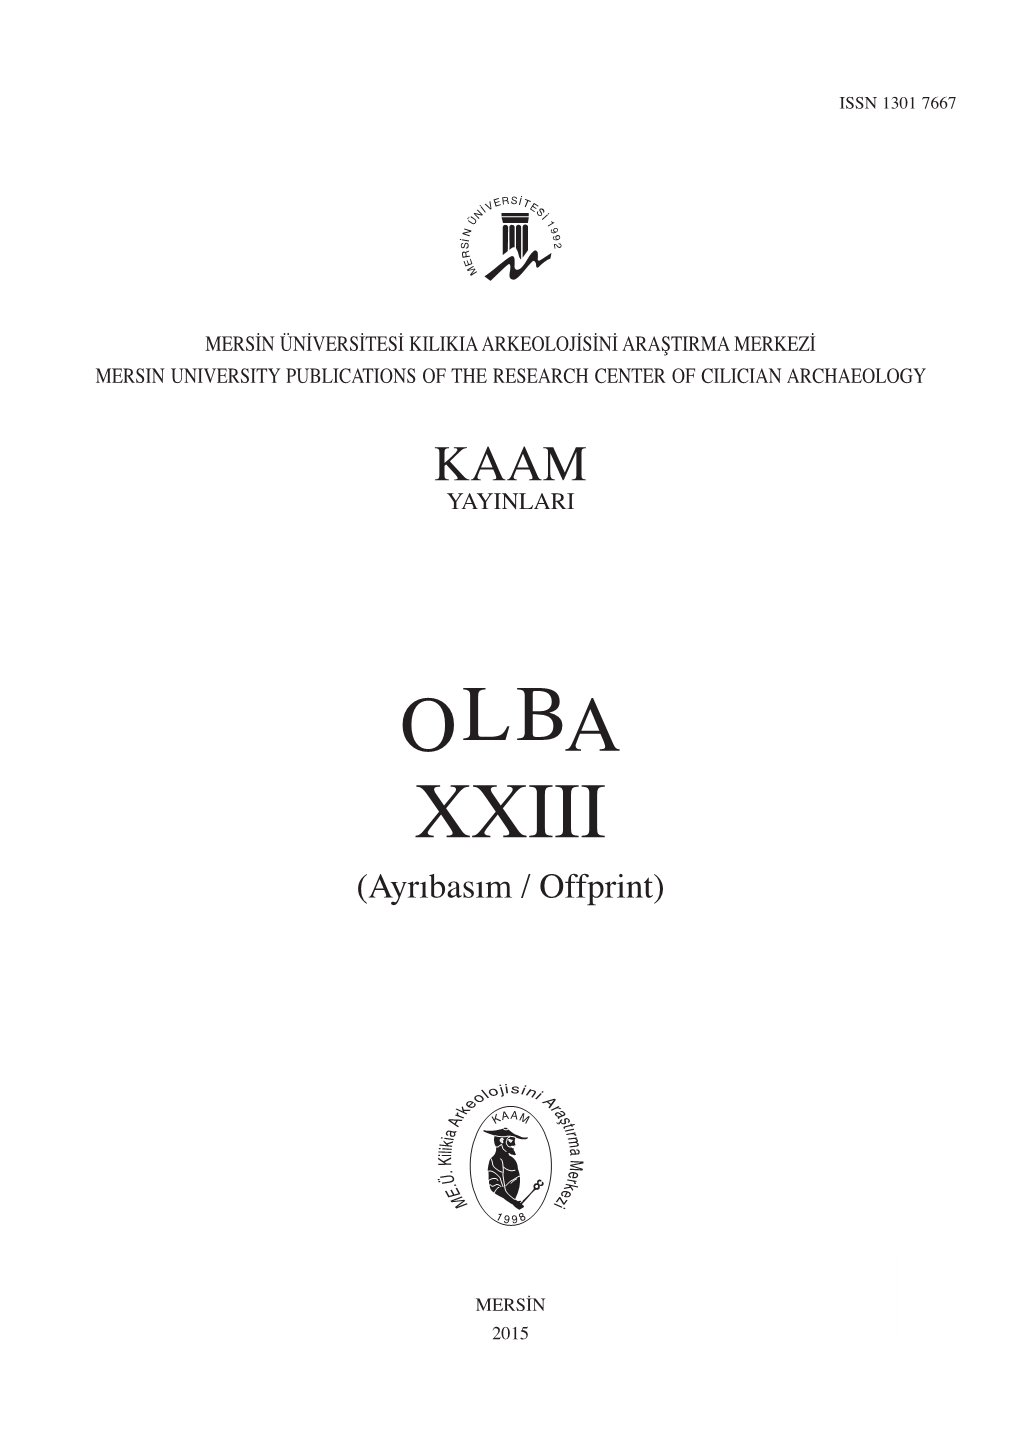 OLBA XXIII (Ayrıbasım / Offprint)